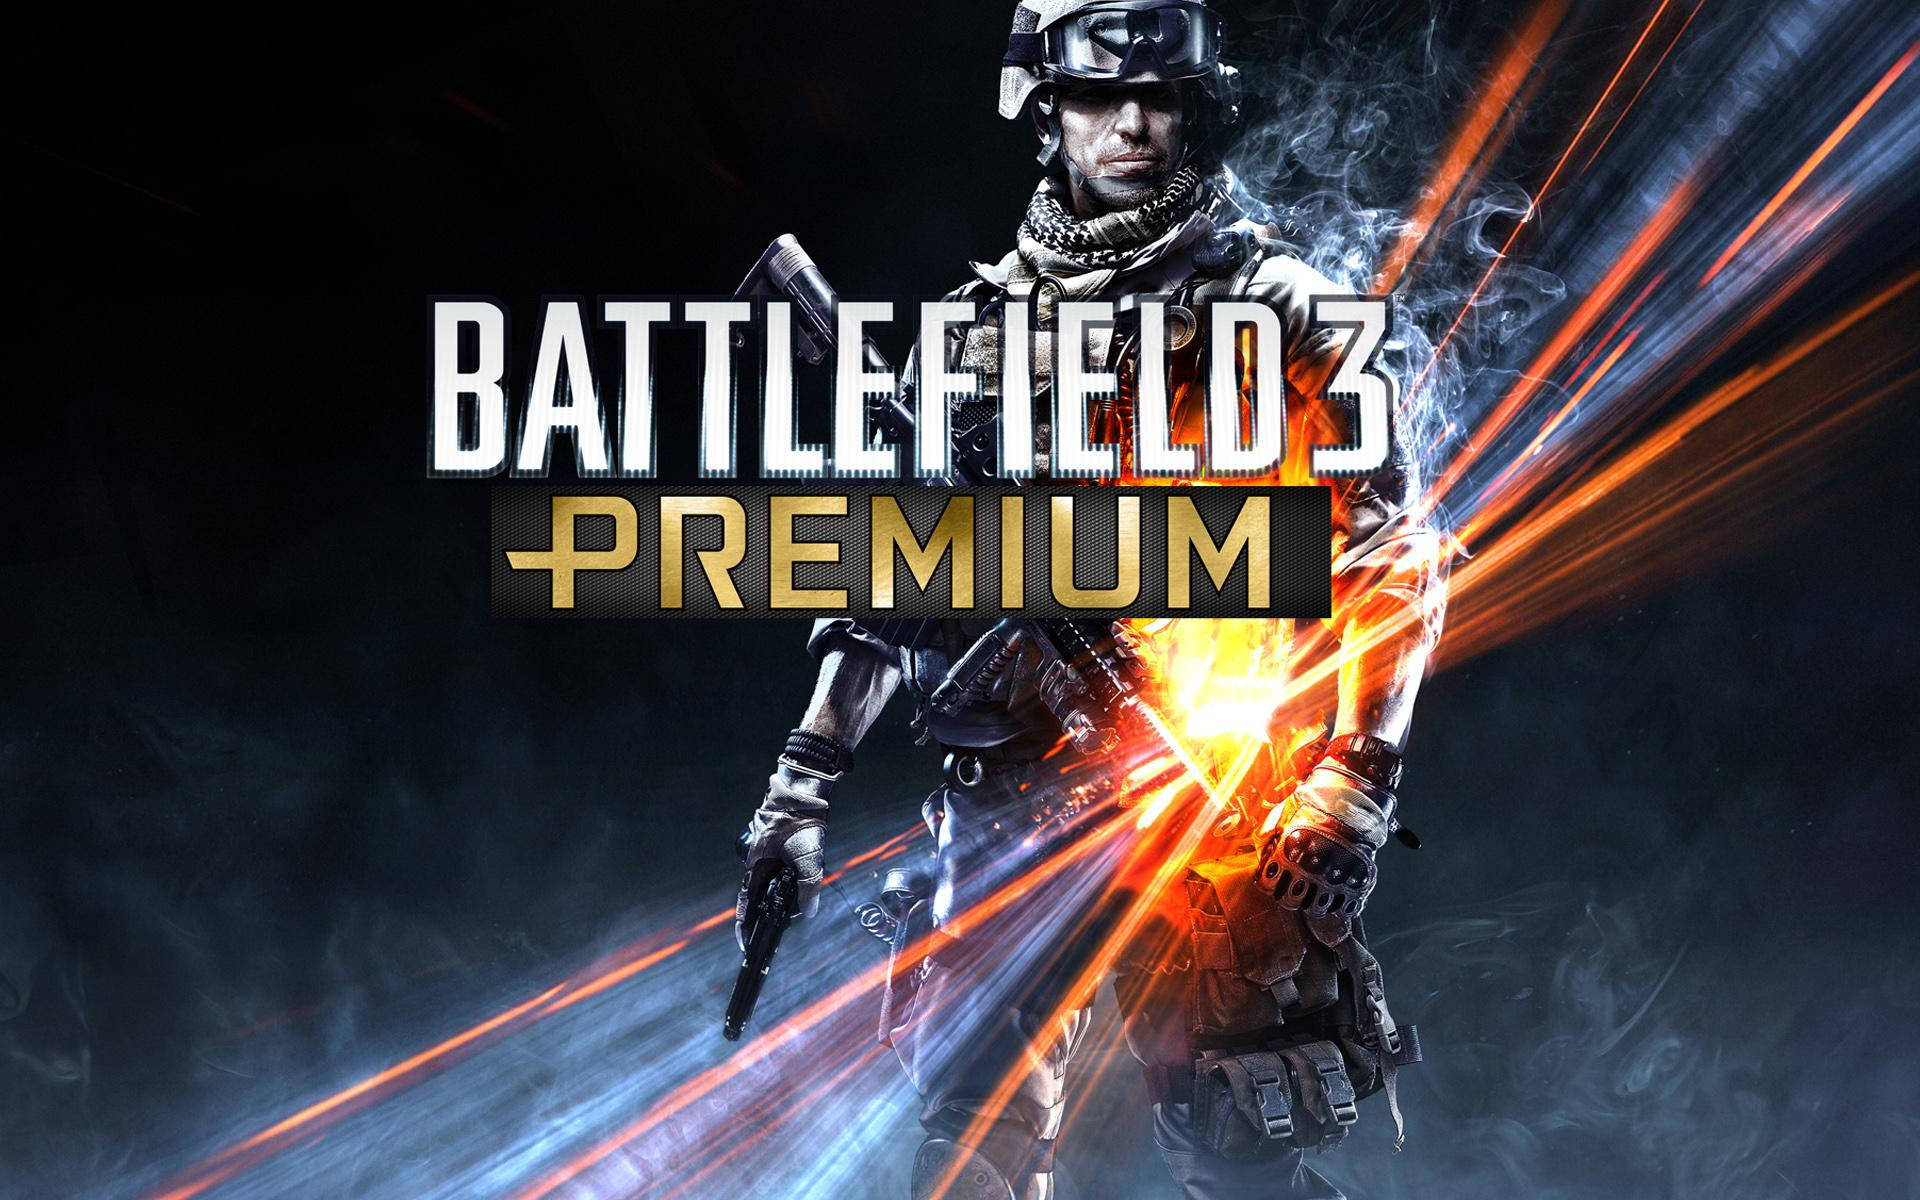 Cool Battlefield 3 Premium Edition Poster Wallpaper